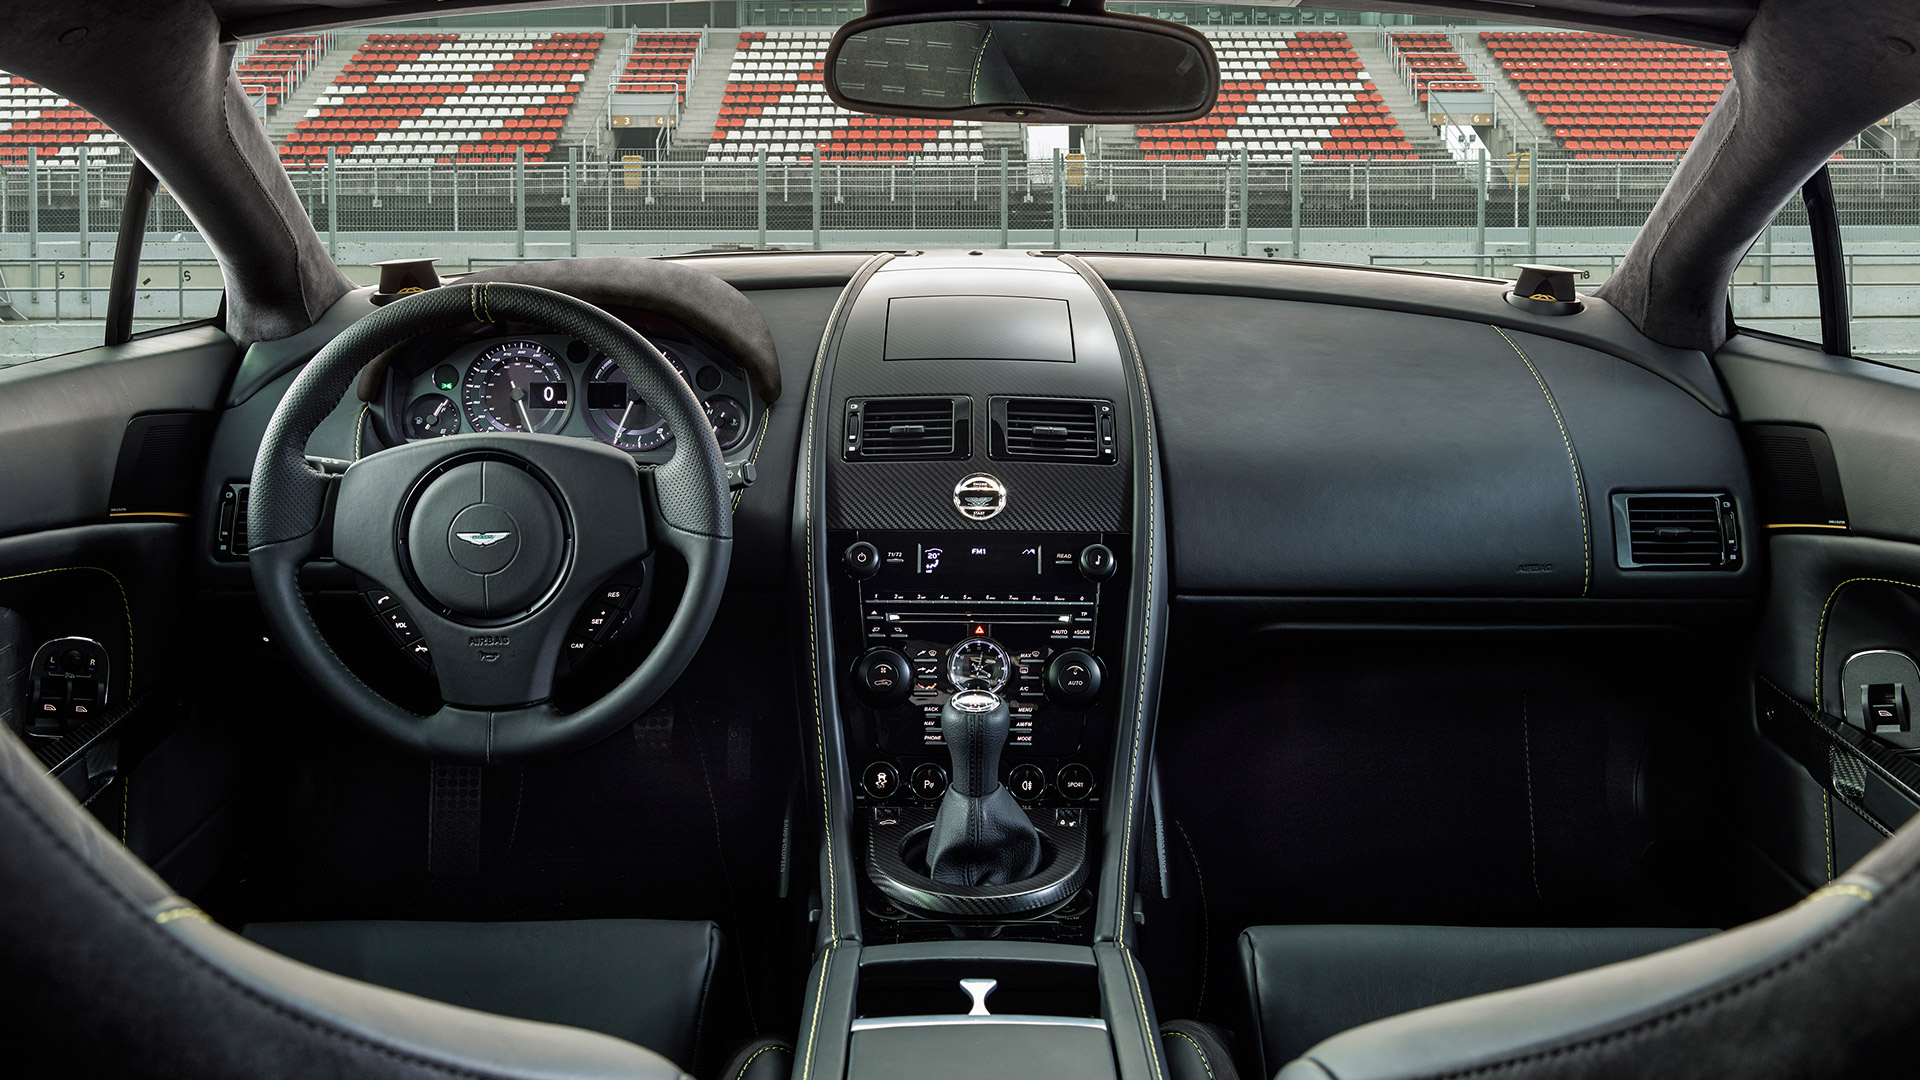 Aston Martin Vantage N430 2013 STD Interior